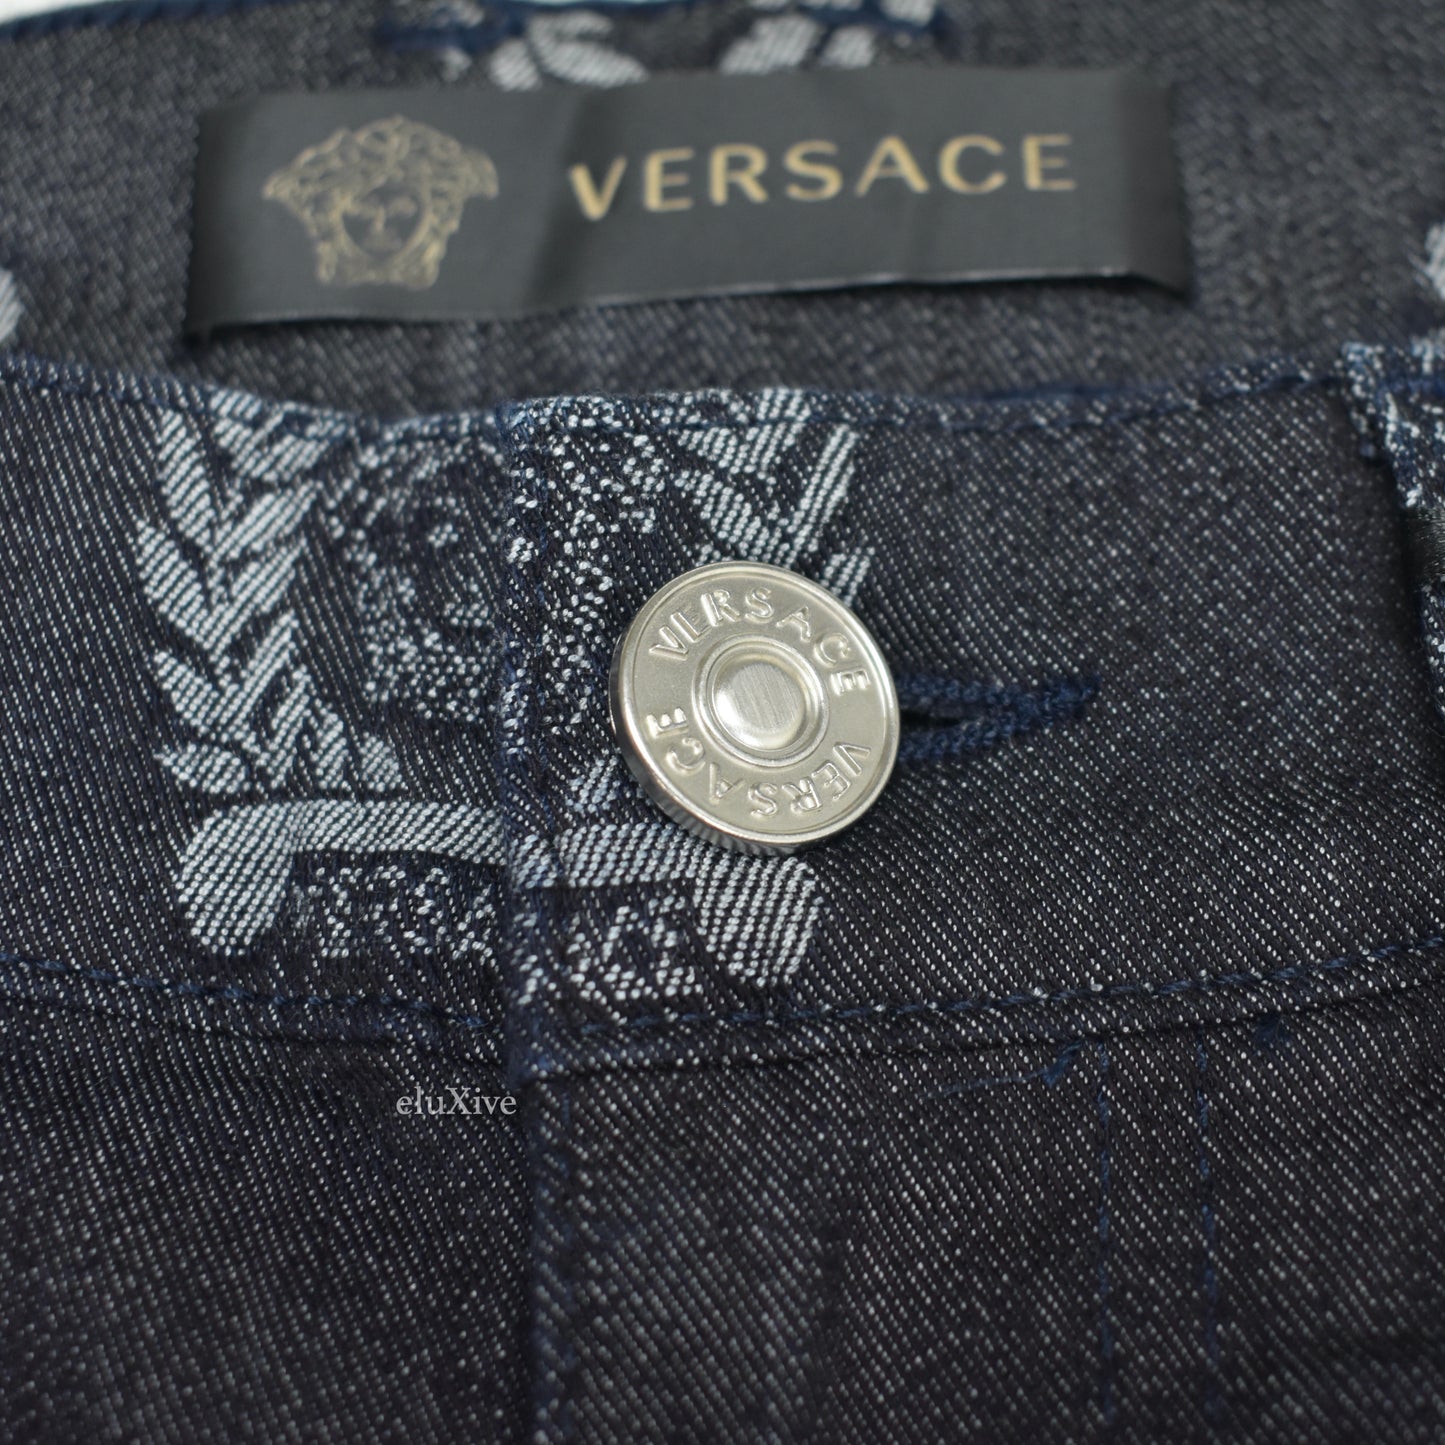 Versace - Black Medusa Wreath Logo Woven Denim Jeans